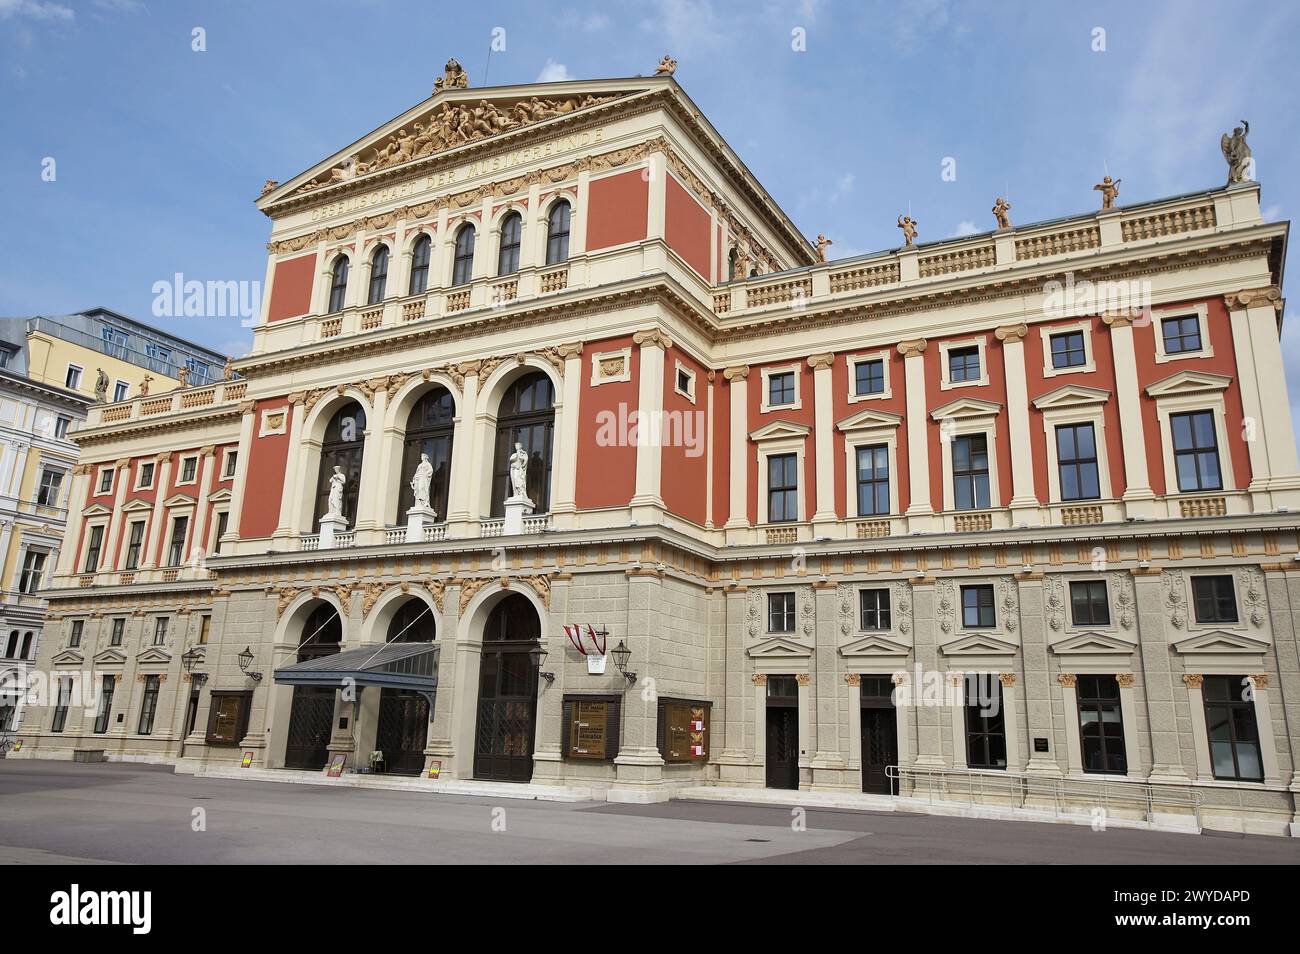 Musikverein concert hall built by the Gesellschaft der Musikfreunde (Society of Friends of Music), Vienna. Austria. Stock Photo